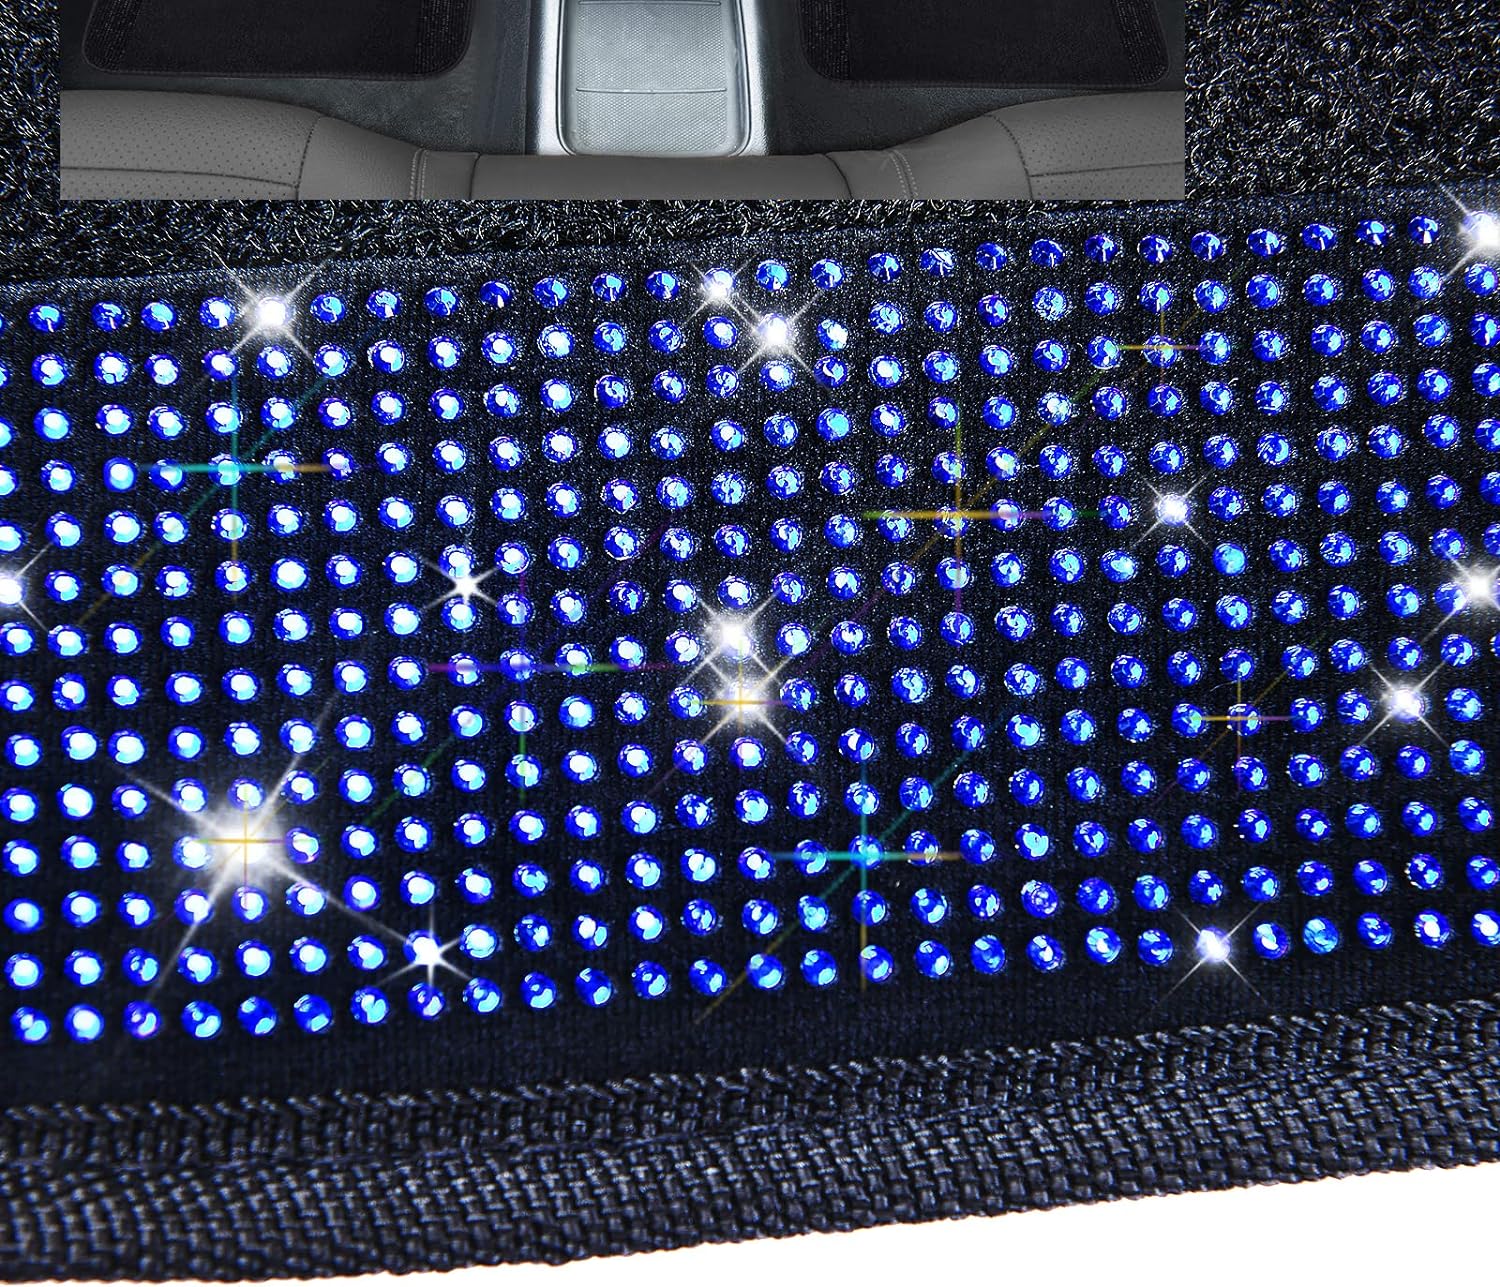 CAR PASS Bling Car Floor Mat & Leather Car Seat Cover, Bling Crystal Diamond Sparkly Glitter Anti-Slip PVC Heel Pad Automotive Universal Fit for SUV Sedan Car Van for Girl Cute Women